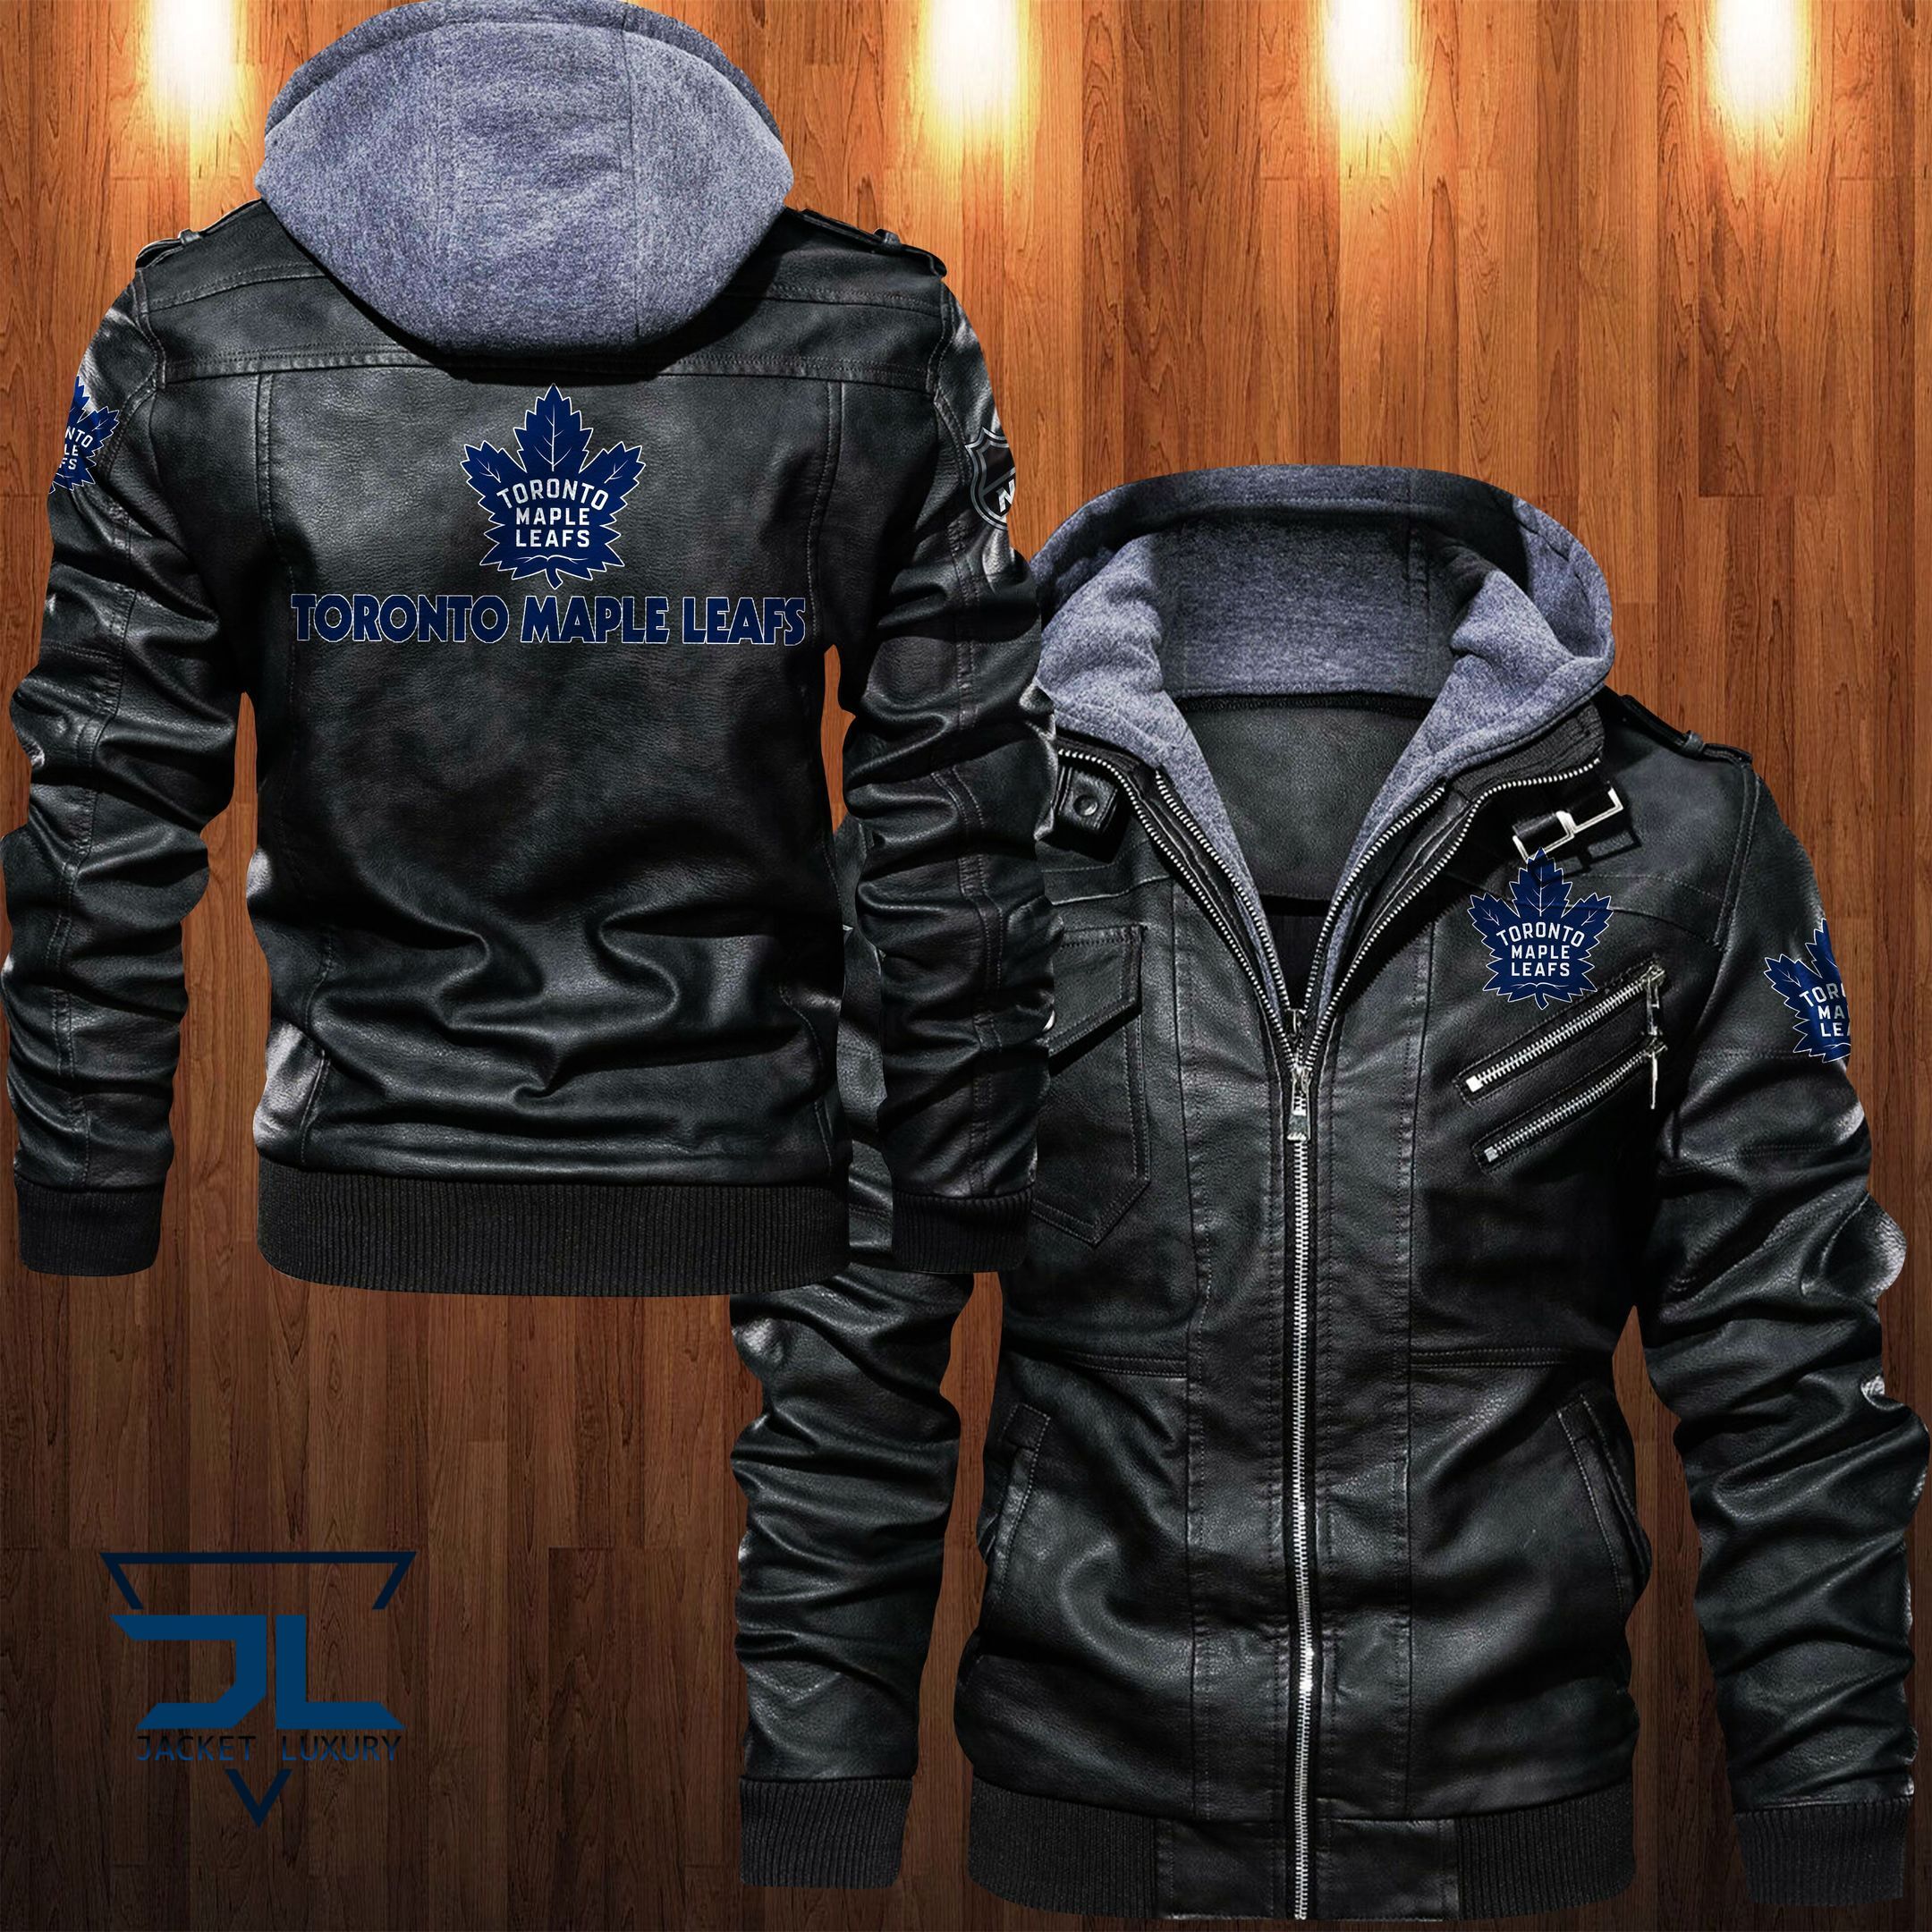 What Leather jacket Sells Best on Techcomshop? 184